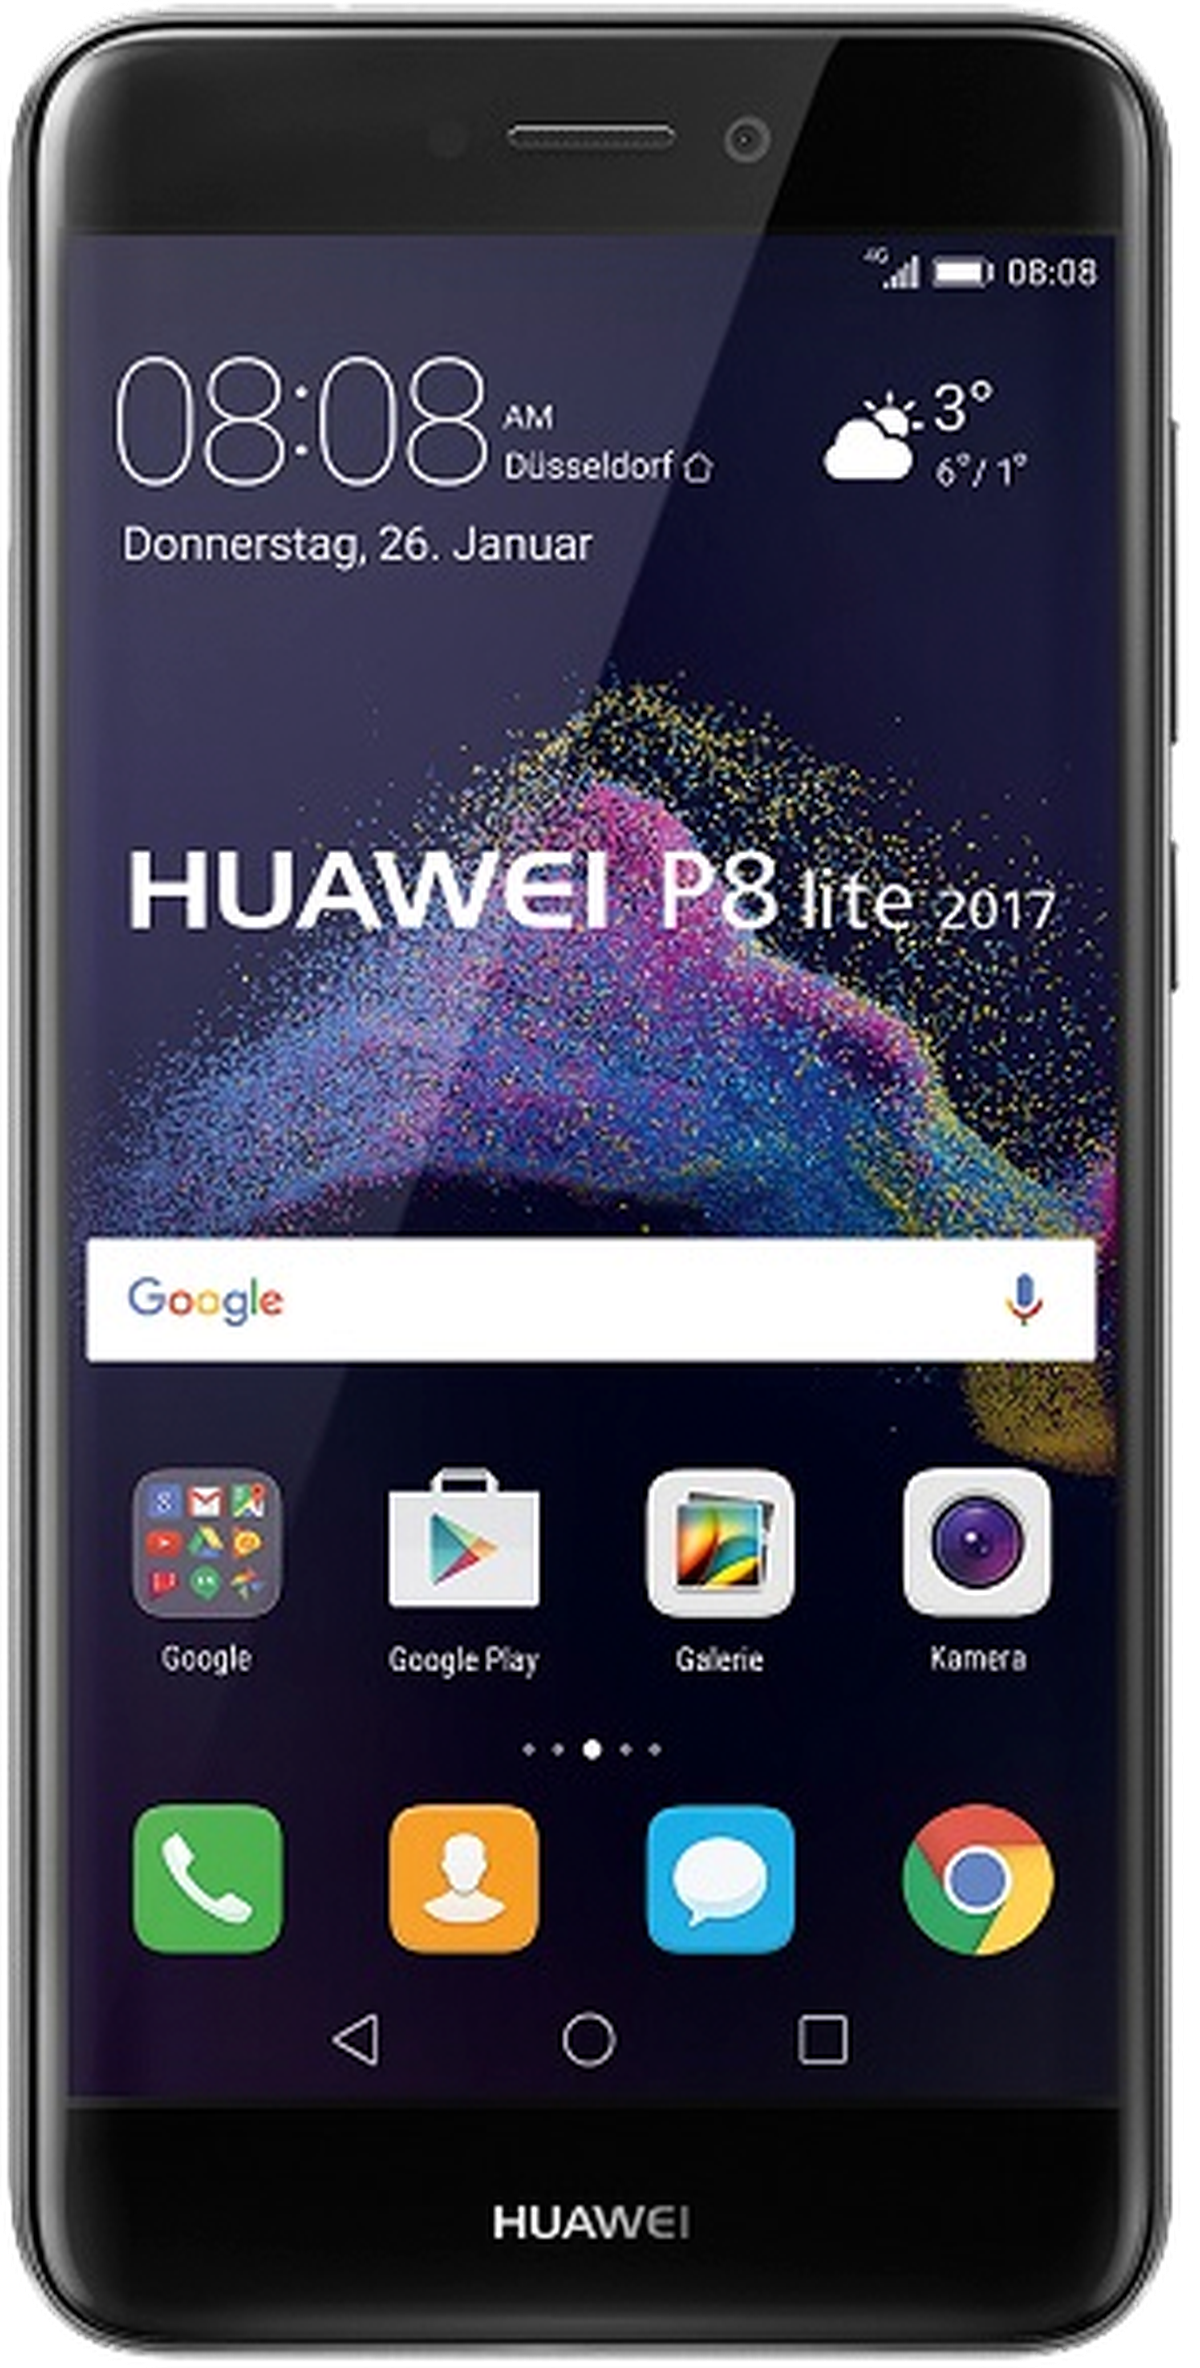 Huawei P8 Lite 2017: características valoraciones | Computer Hoy